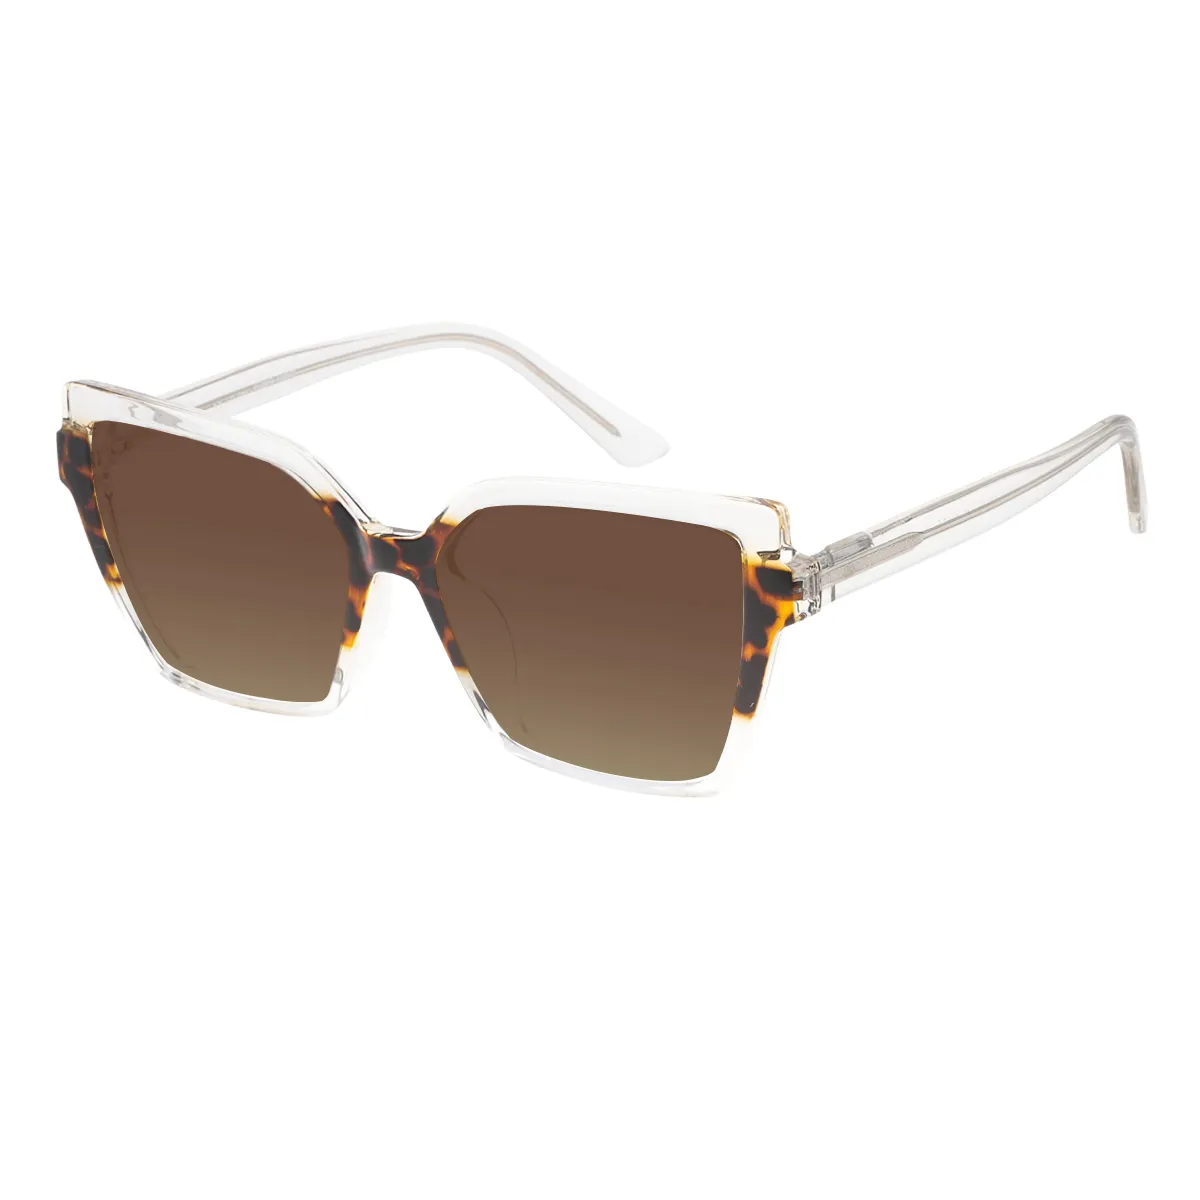 Vesta - Square Transparent Sunglasses for Women